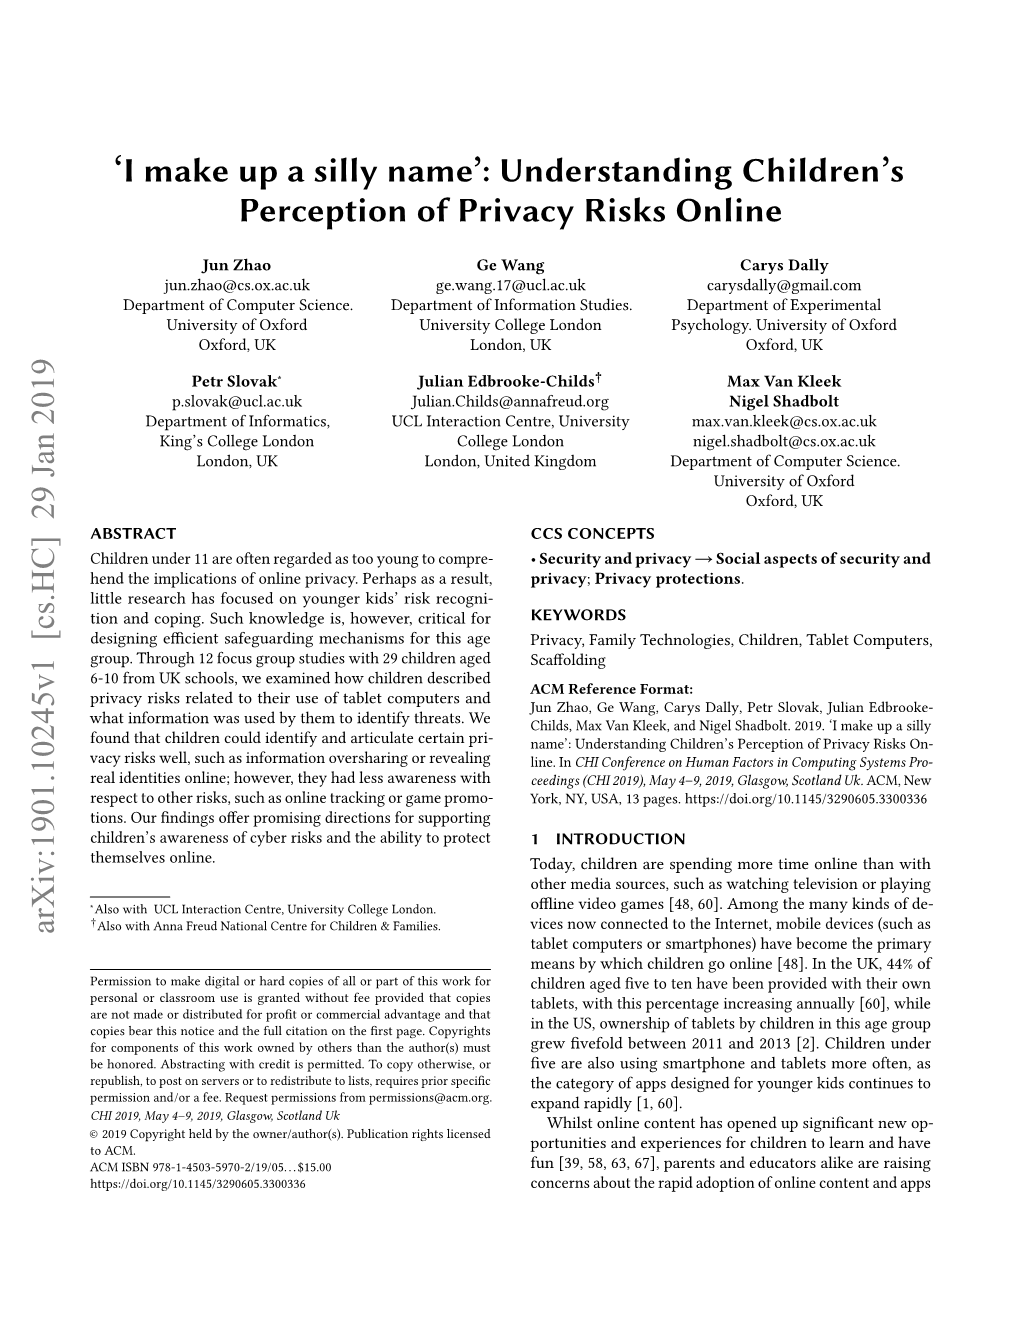 Understanding Children's Perception of Privacy Risks Online